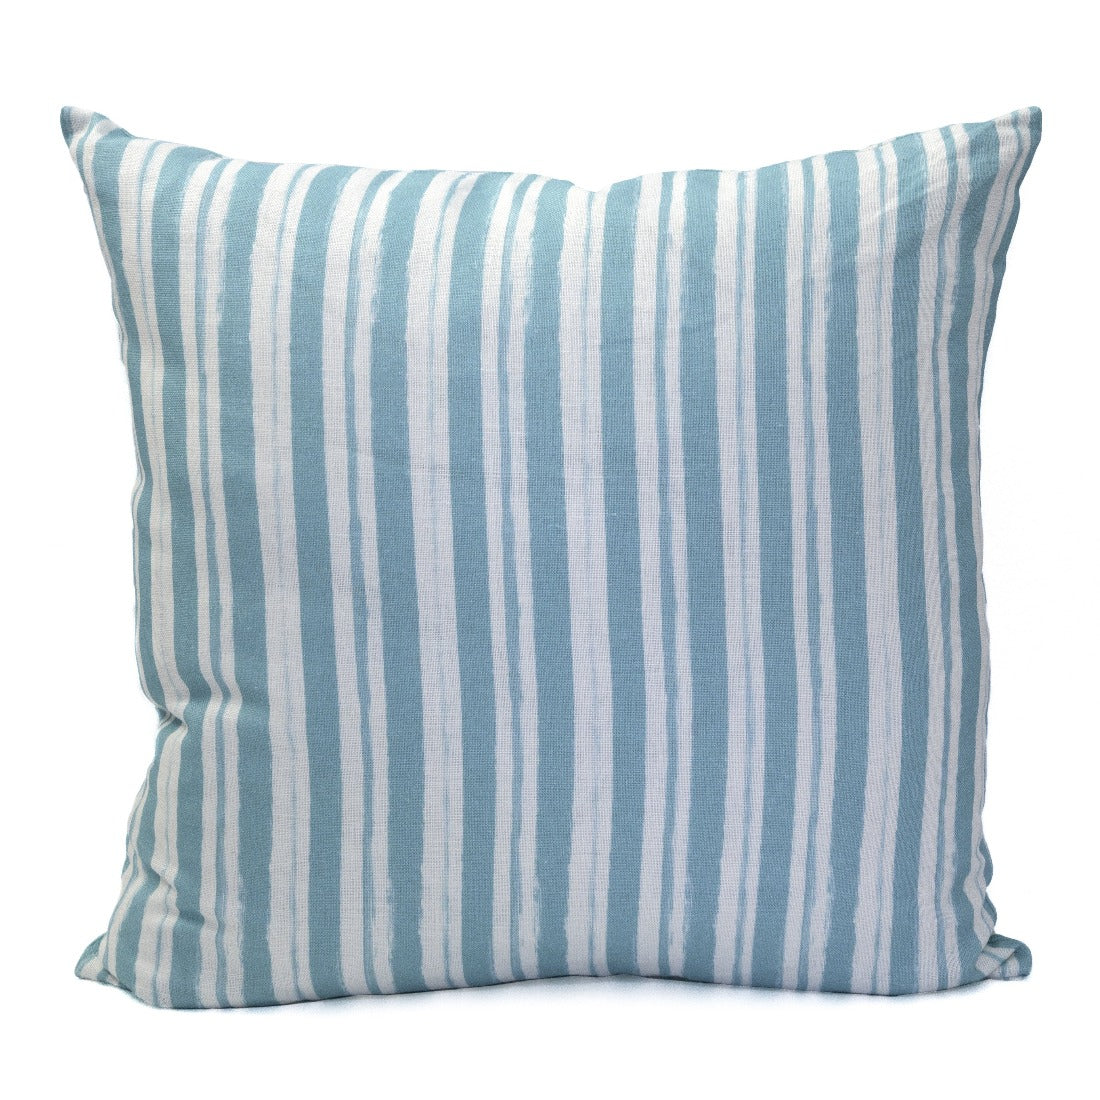 Painterly Stripe Pillow, Oyster Linen